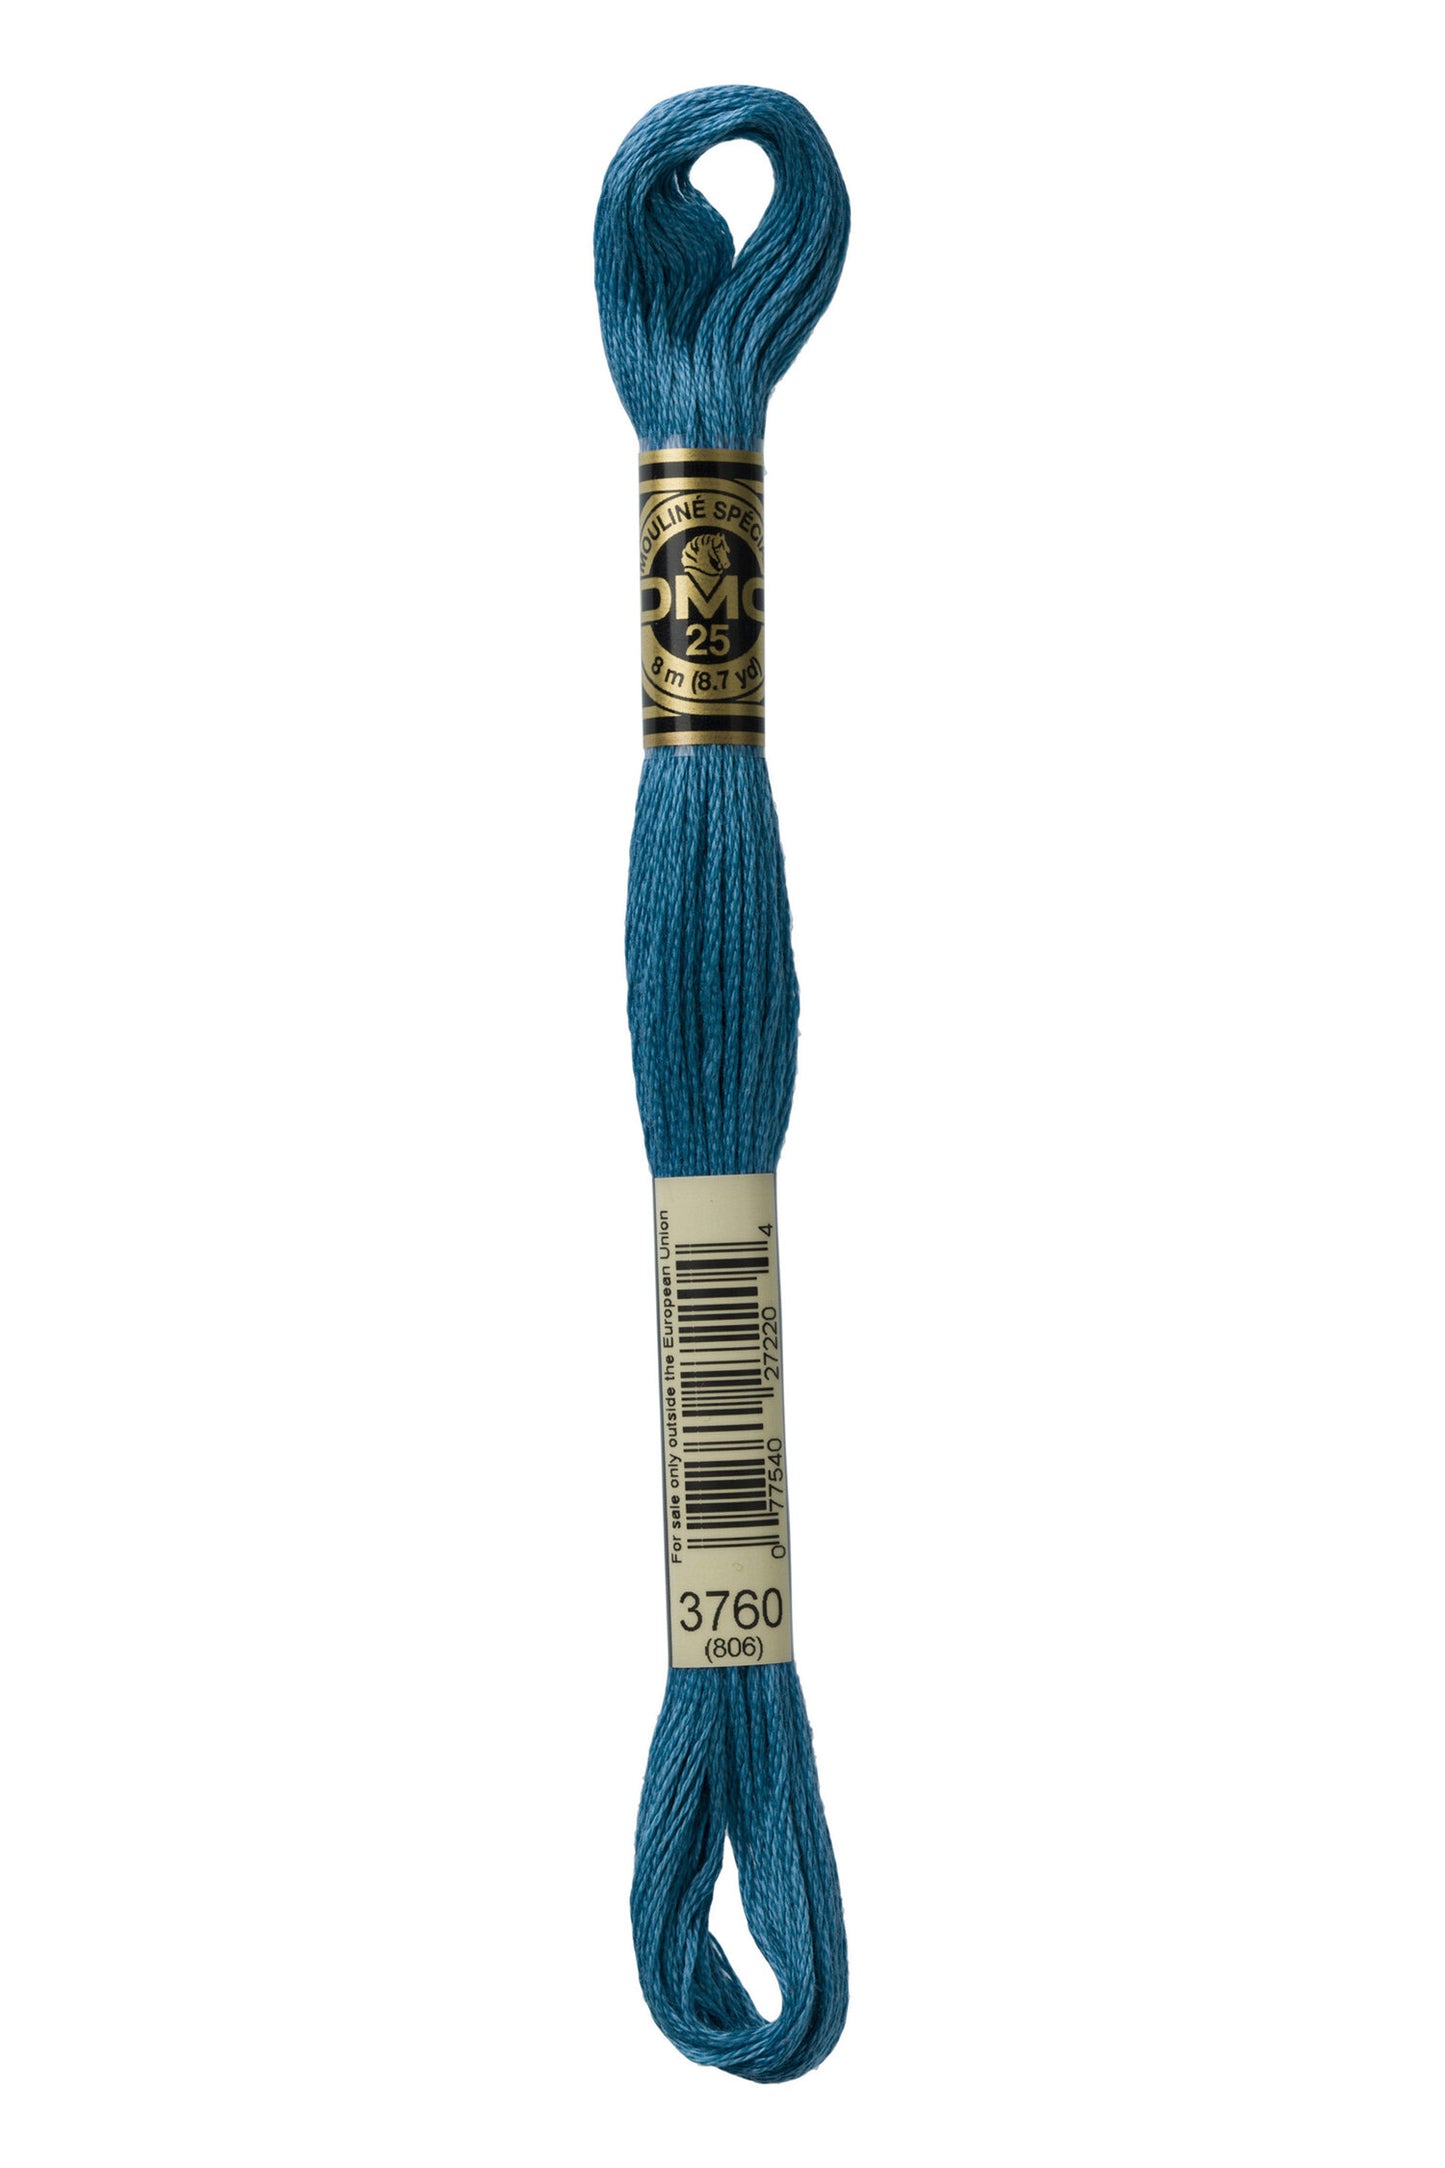 DMC 3760 - Wedgewood - Medium - DMC 6 Strand Embroidery Thread, Thread & Floss, Thread & Floss, The Crafty Grimalkin - A Cross Stitch Store